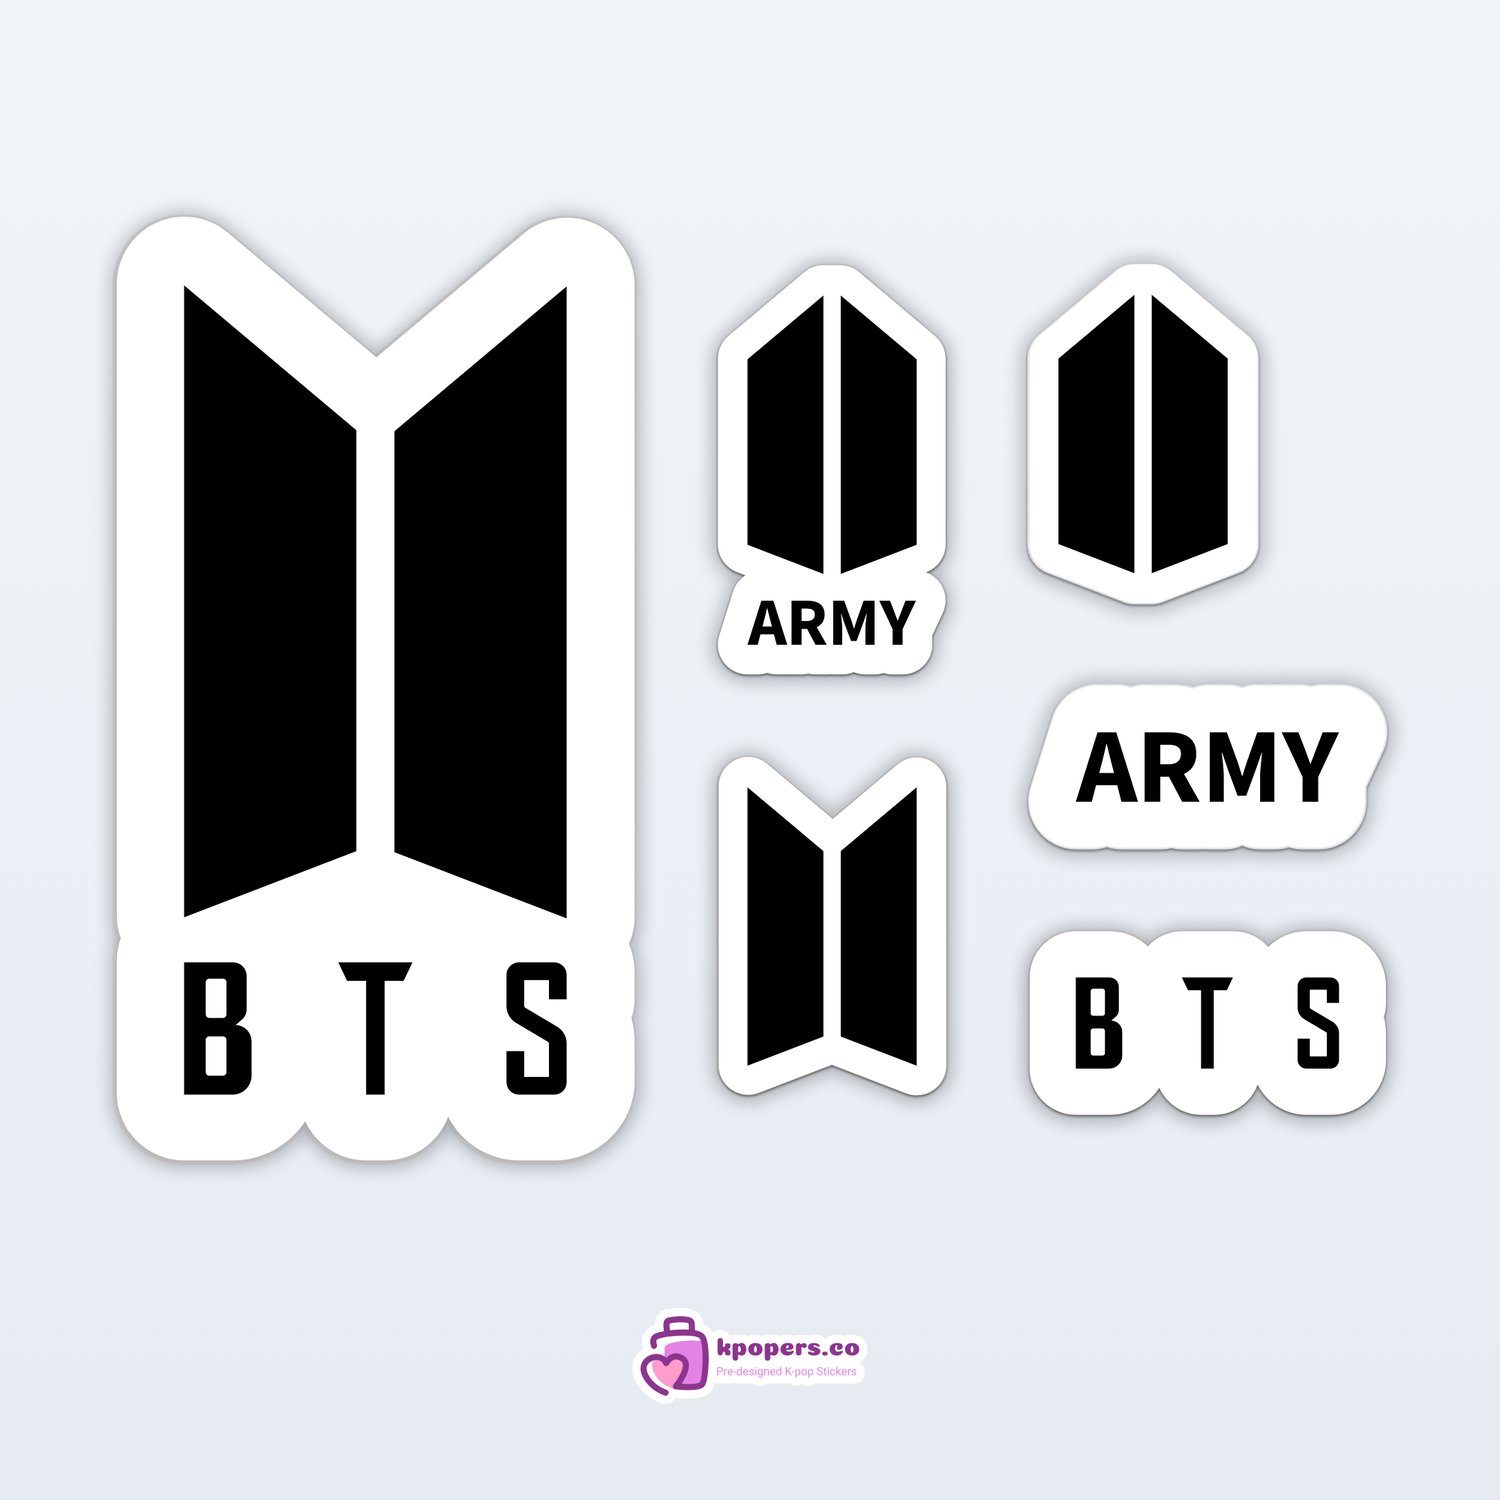 BTS & BTS Army Logo